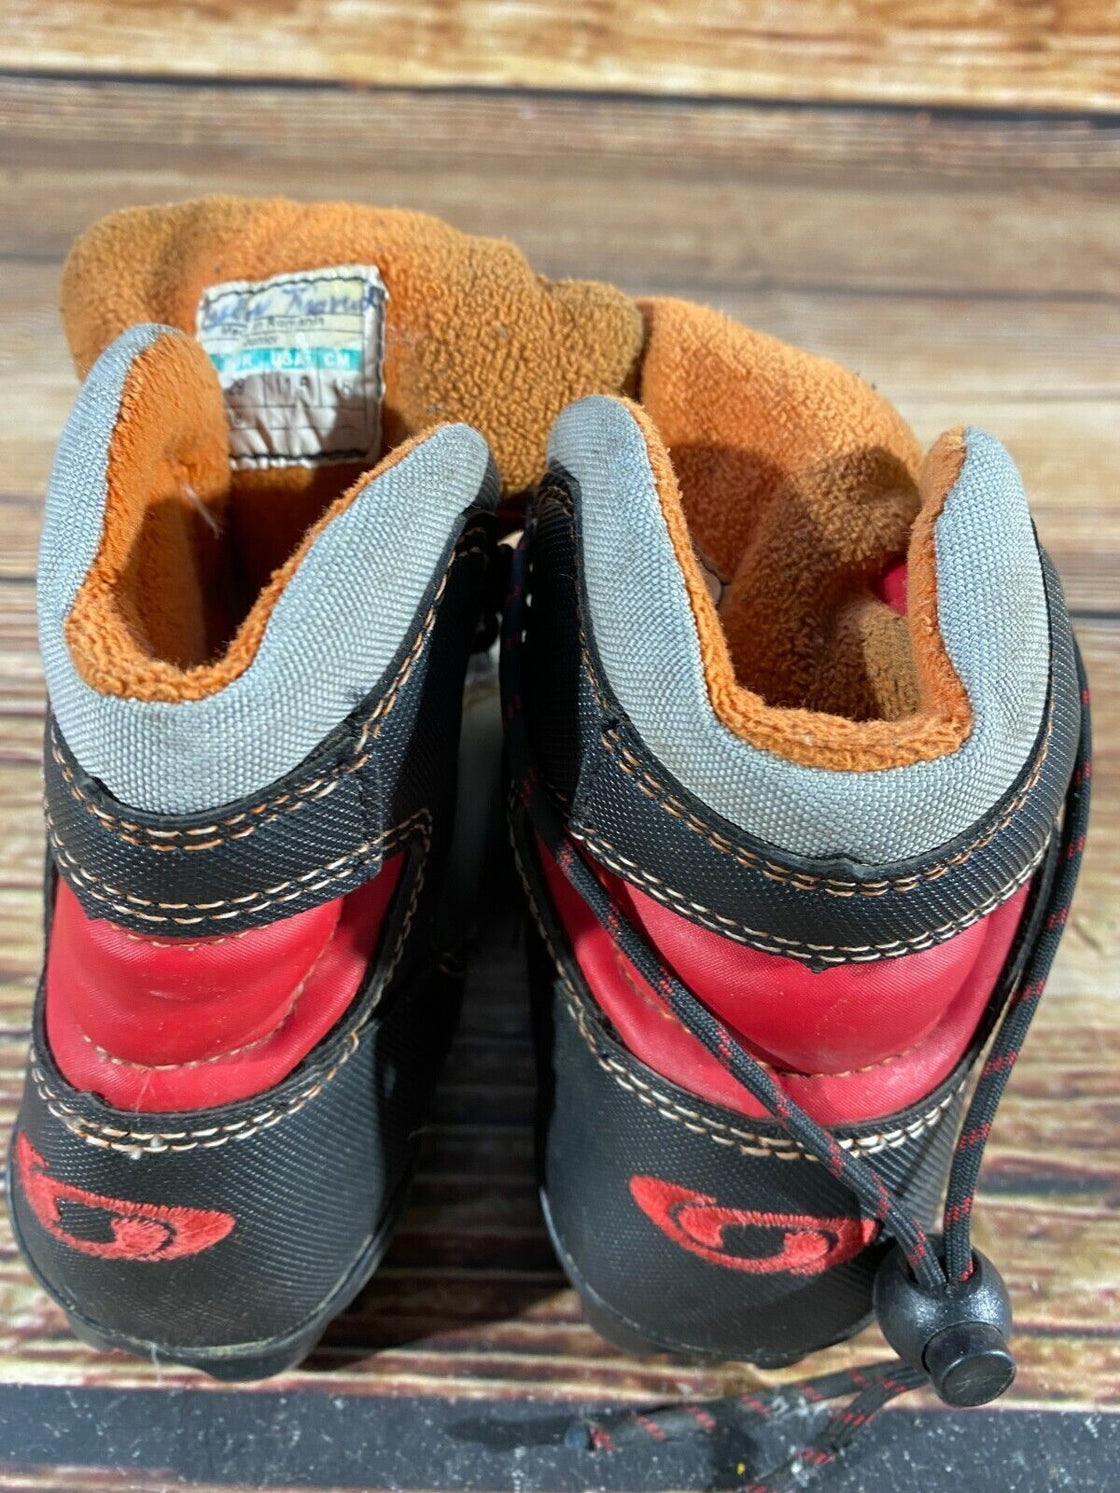 SALOMON Kids Nordic Cross Country Ski Boots Size EU29 US11.5 SNS S-51